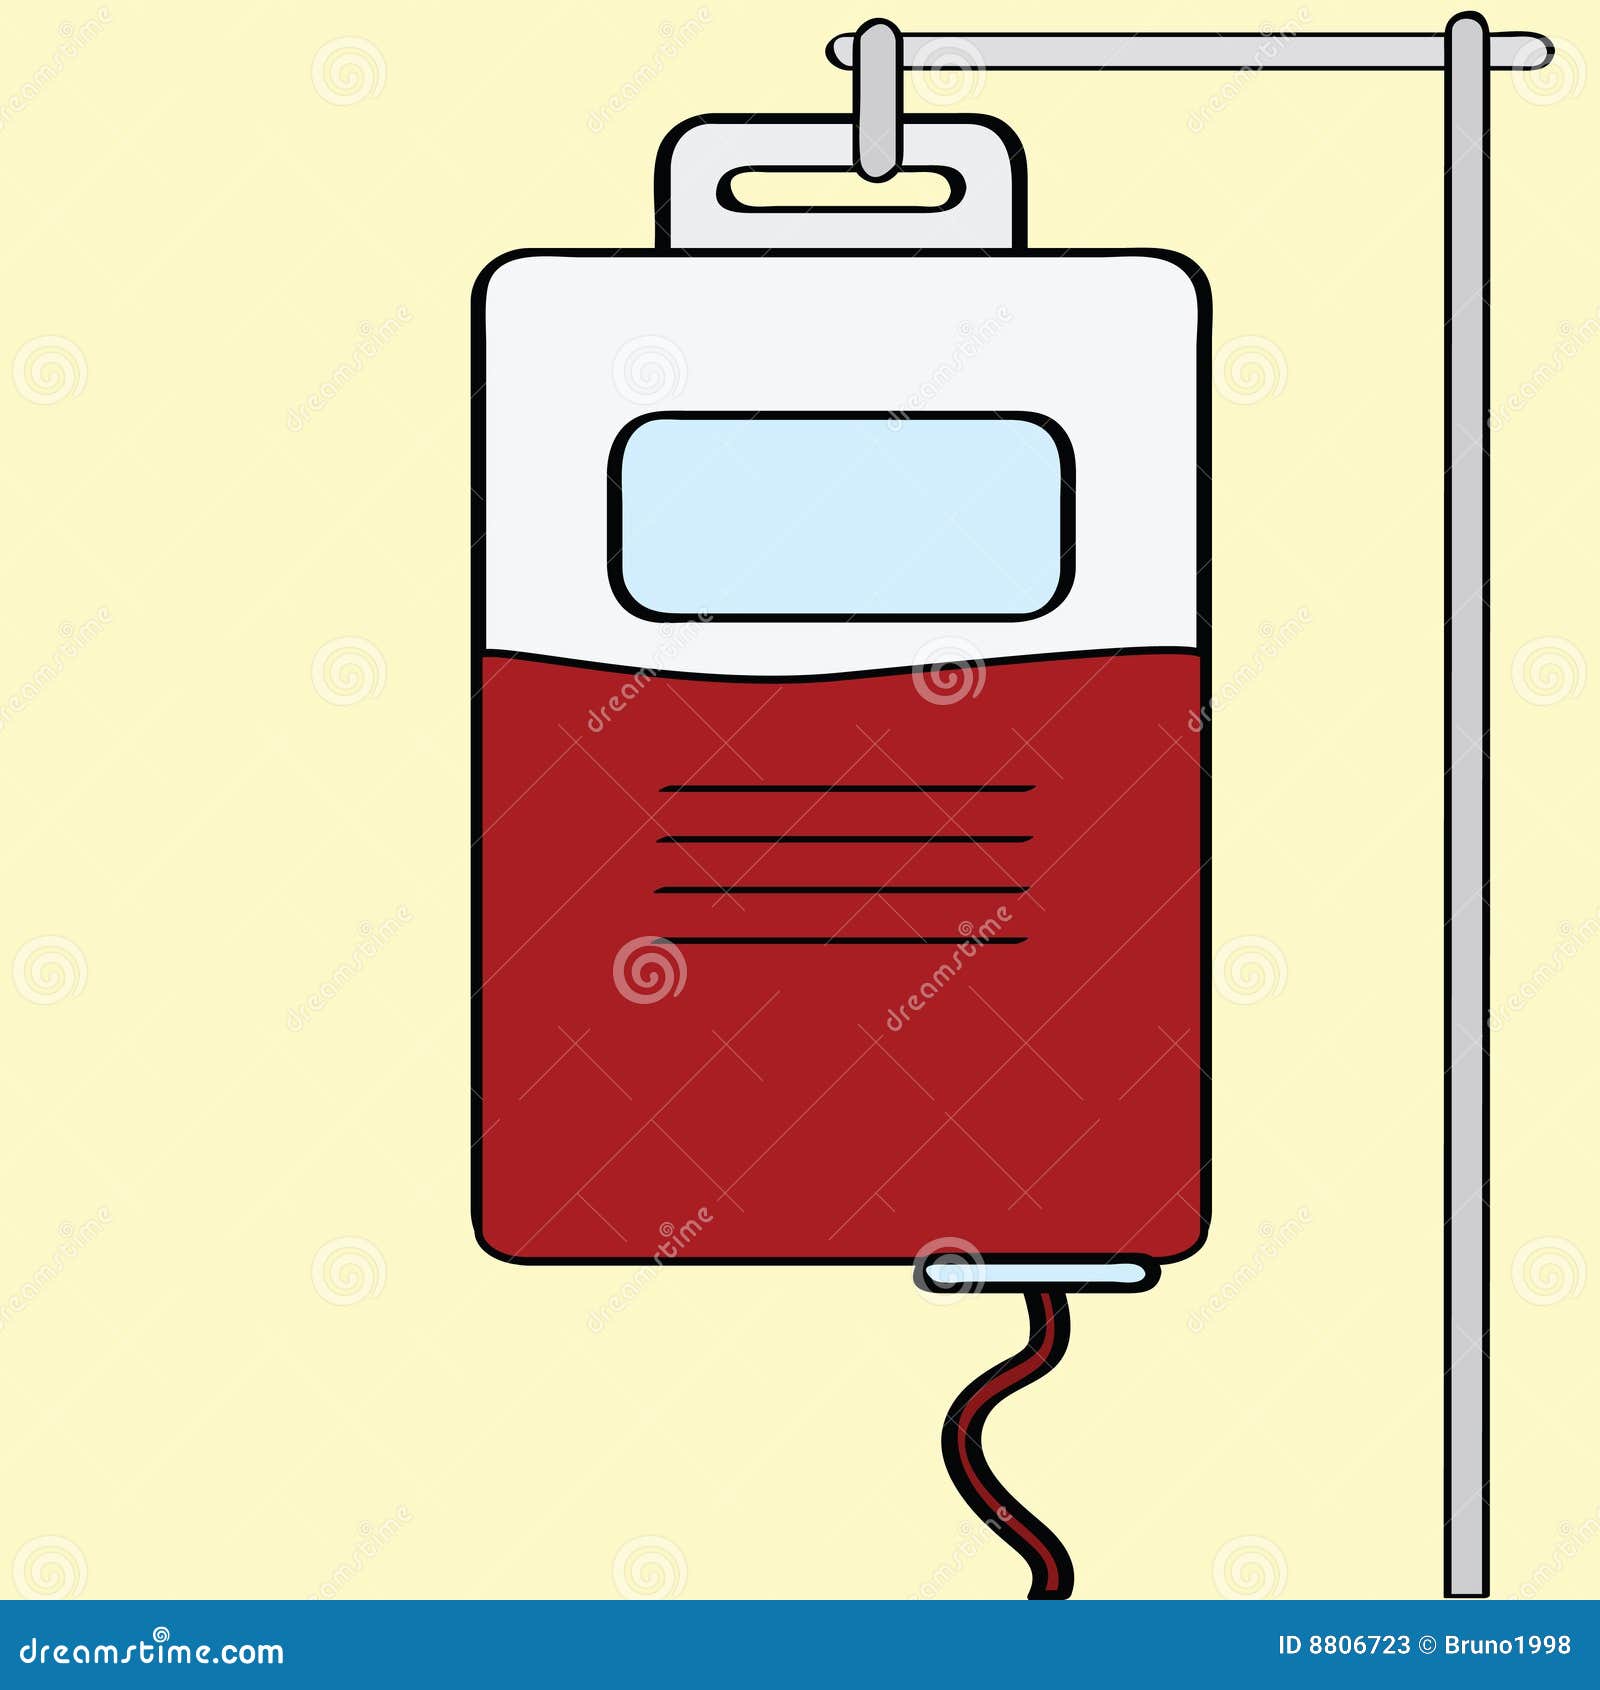 blood transfusion clipart - photo #27